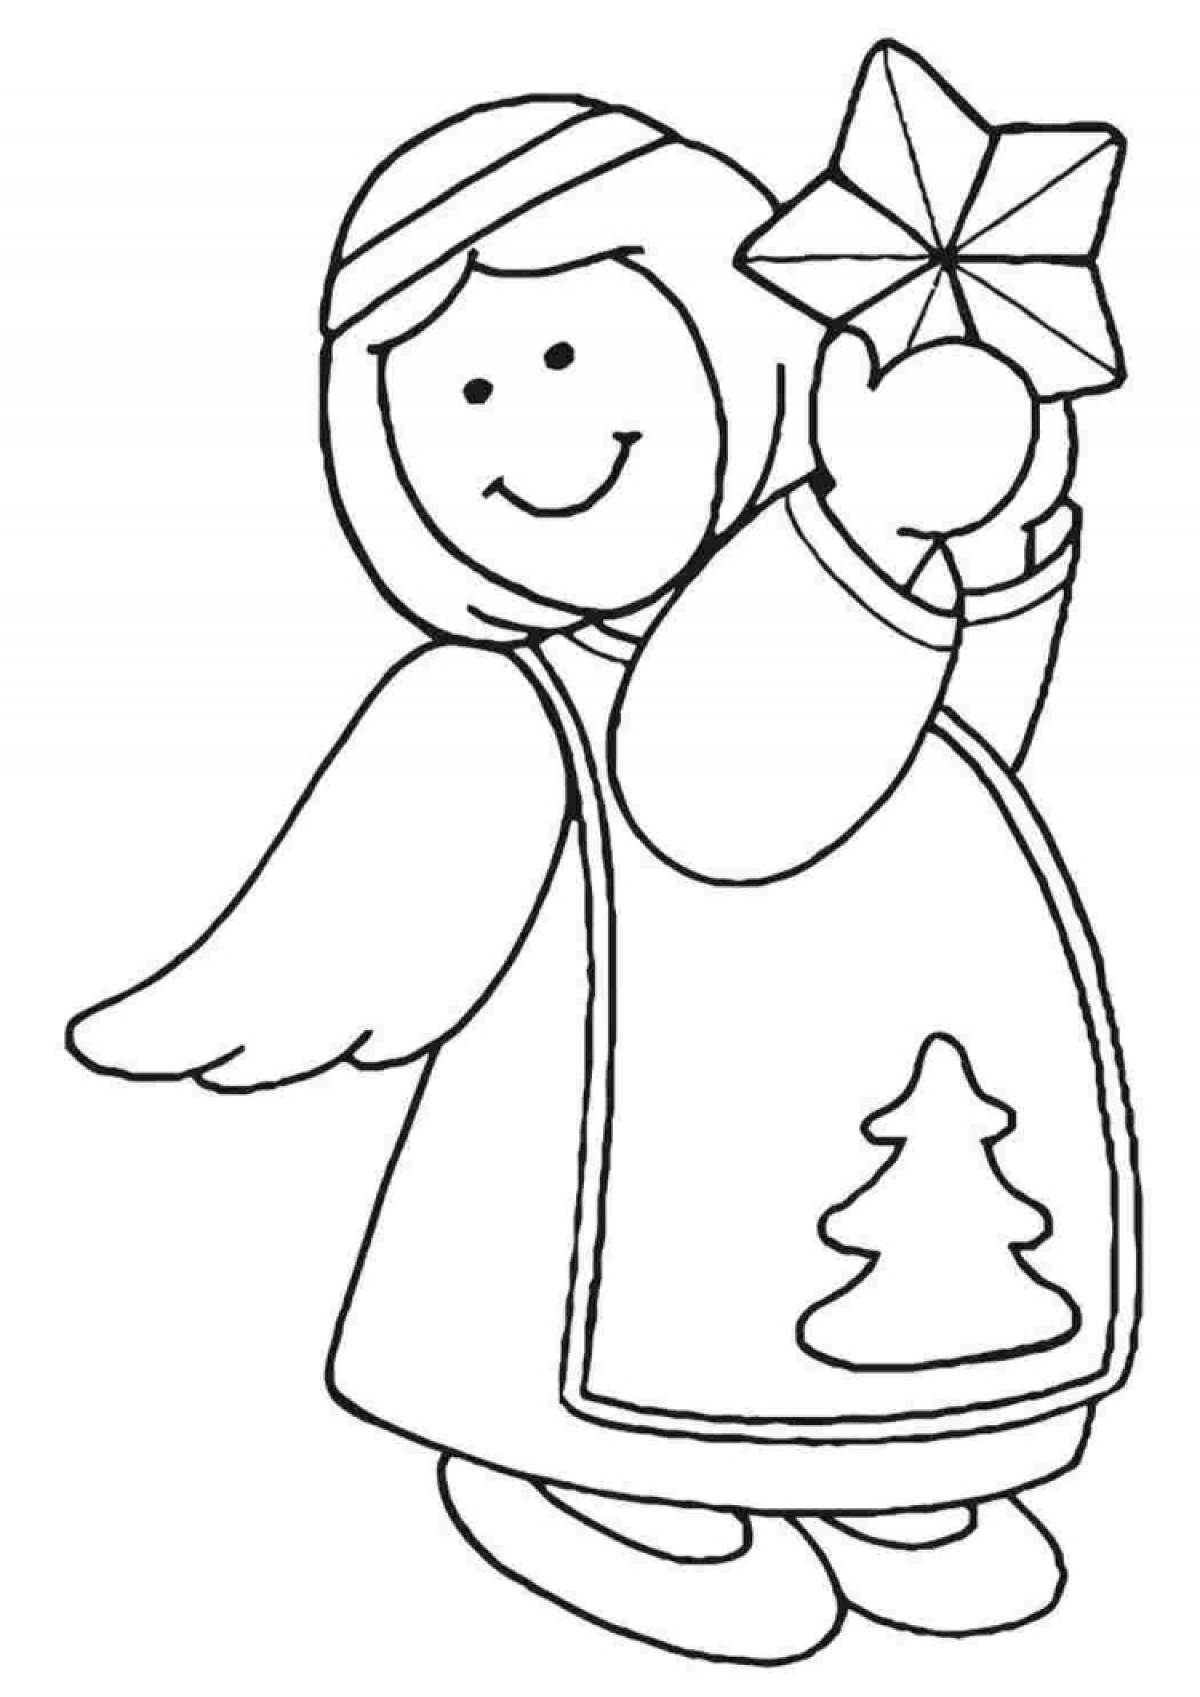 Wonderful Christmas angel coloring book